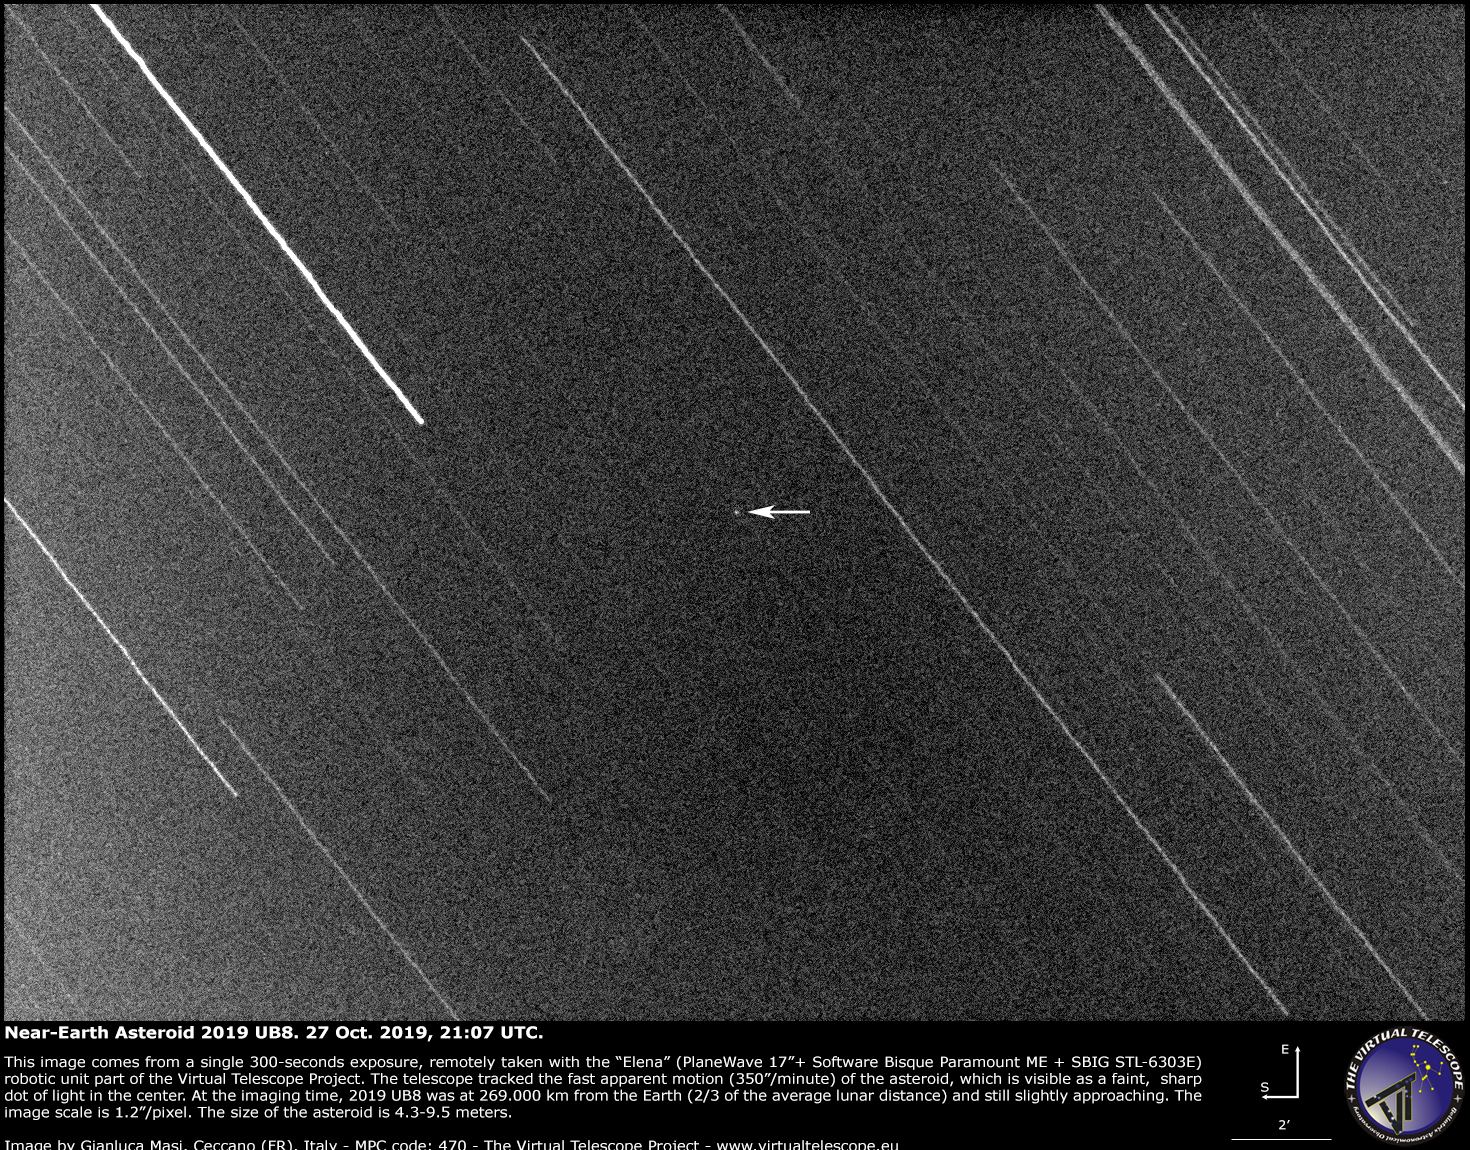 Near-Earth Asteroid 2019 UB8 very close encounter: an image (29 Oct. 2019)